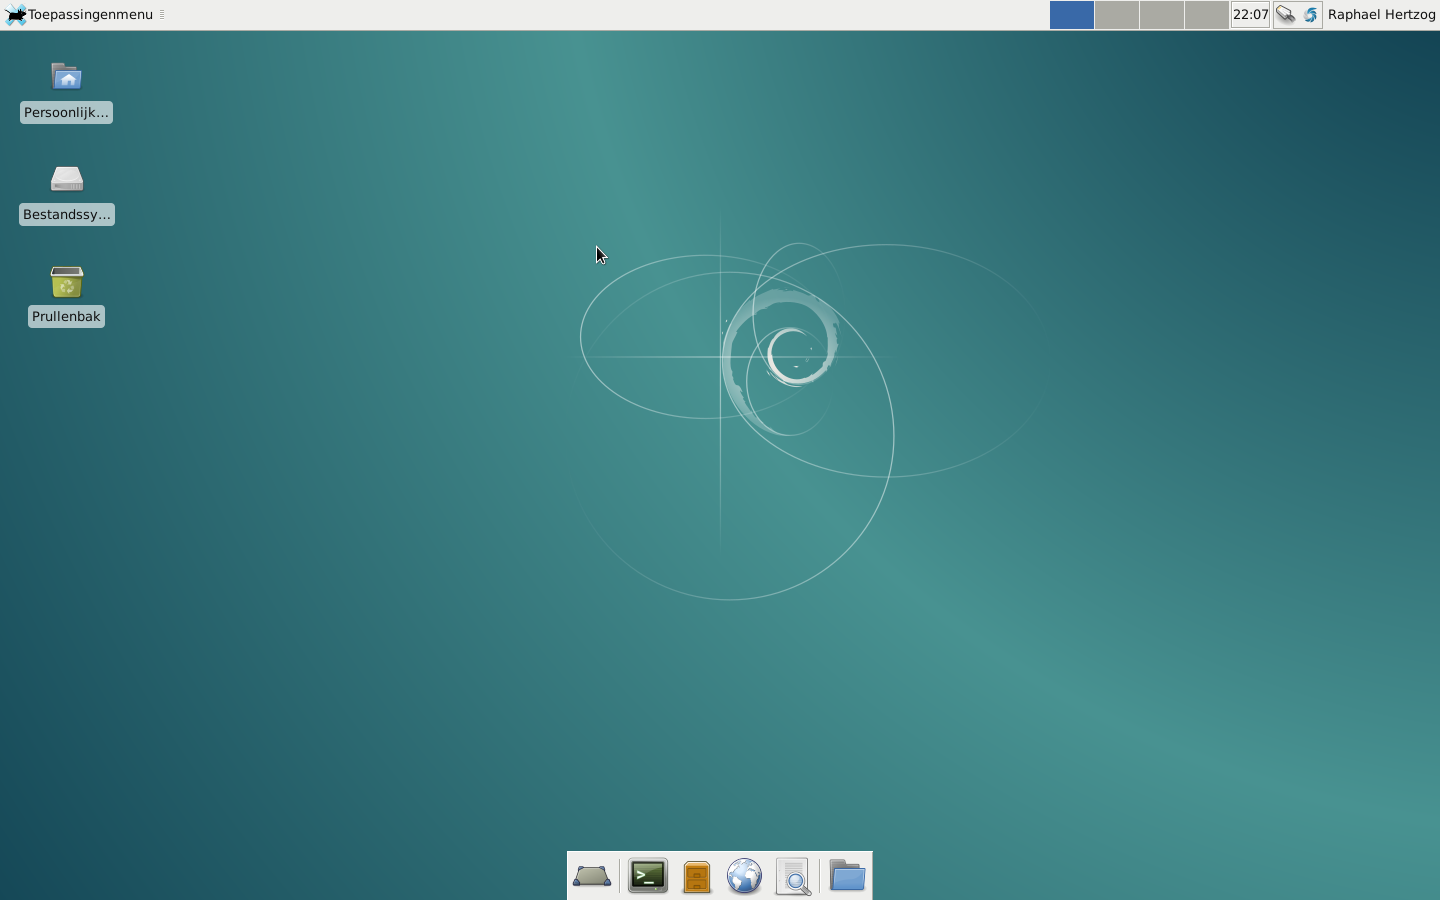 The Xfce desktop